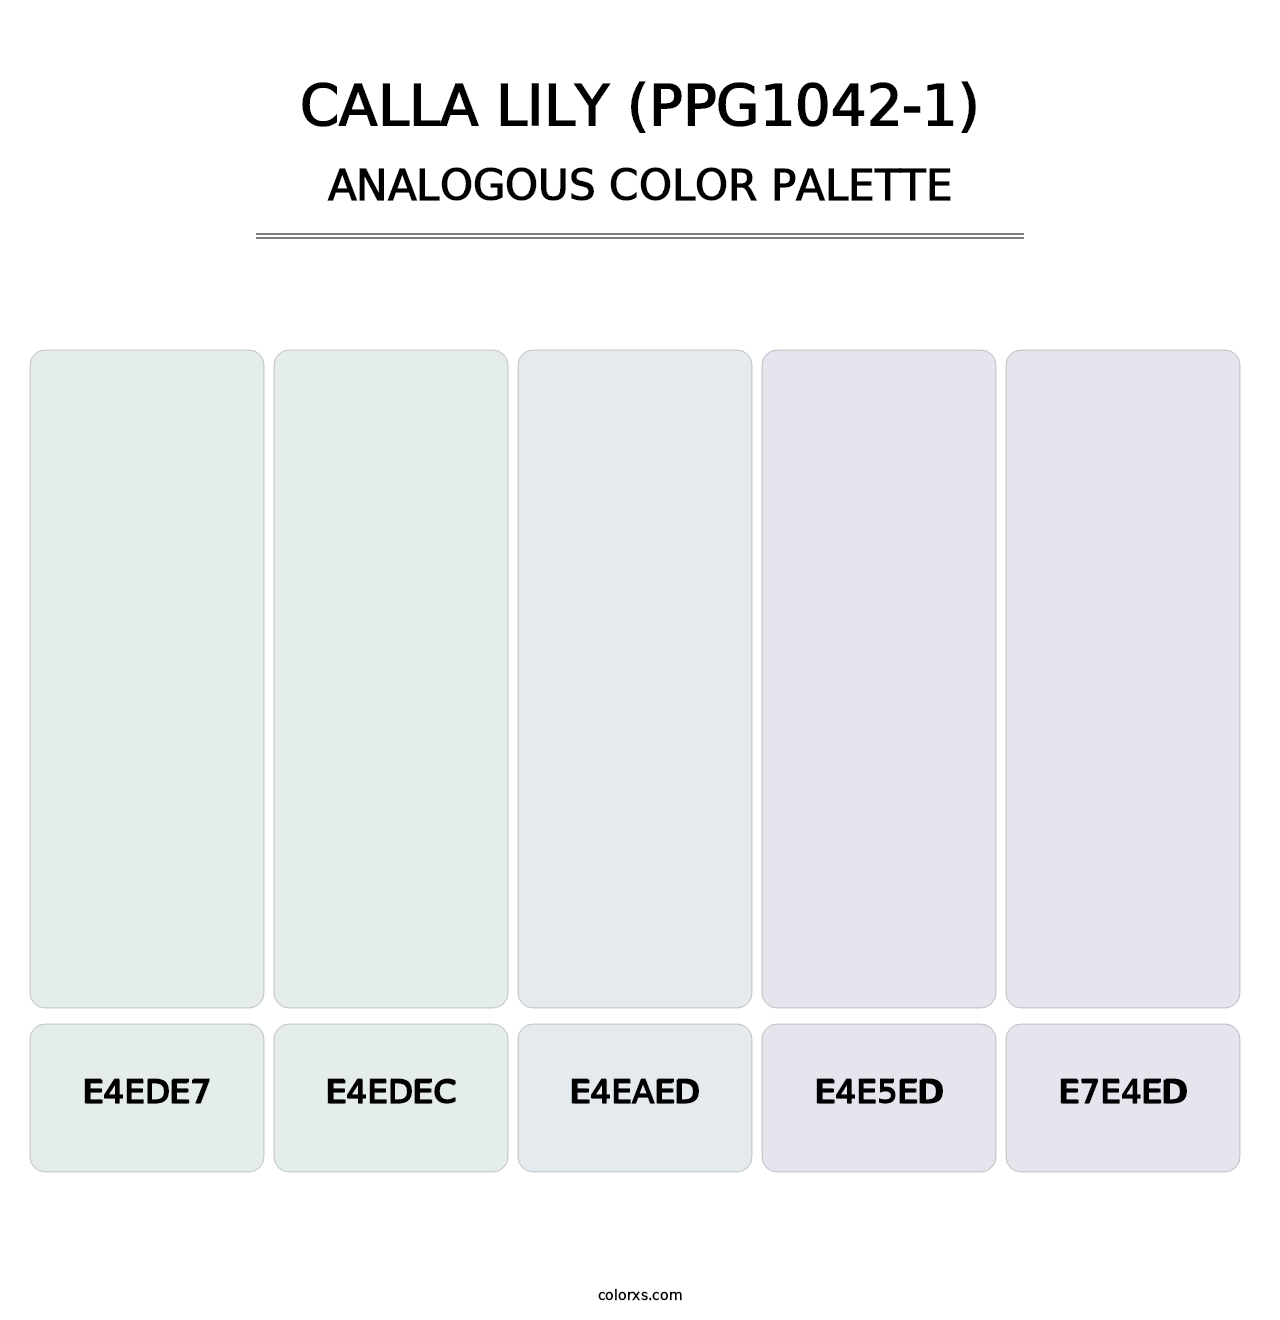 Calla Lily (PPG1042-1) - Analogous Color Palette